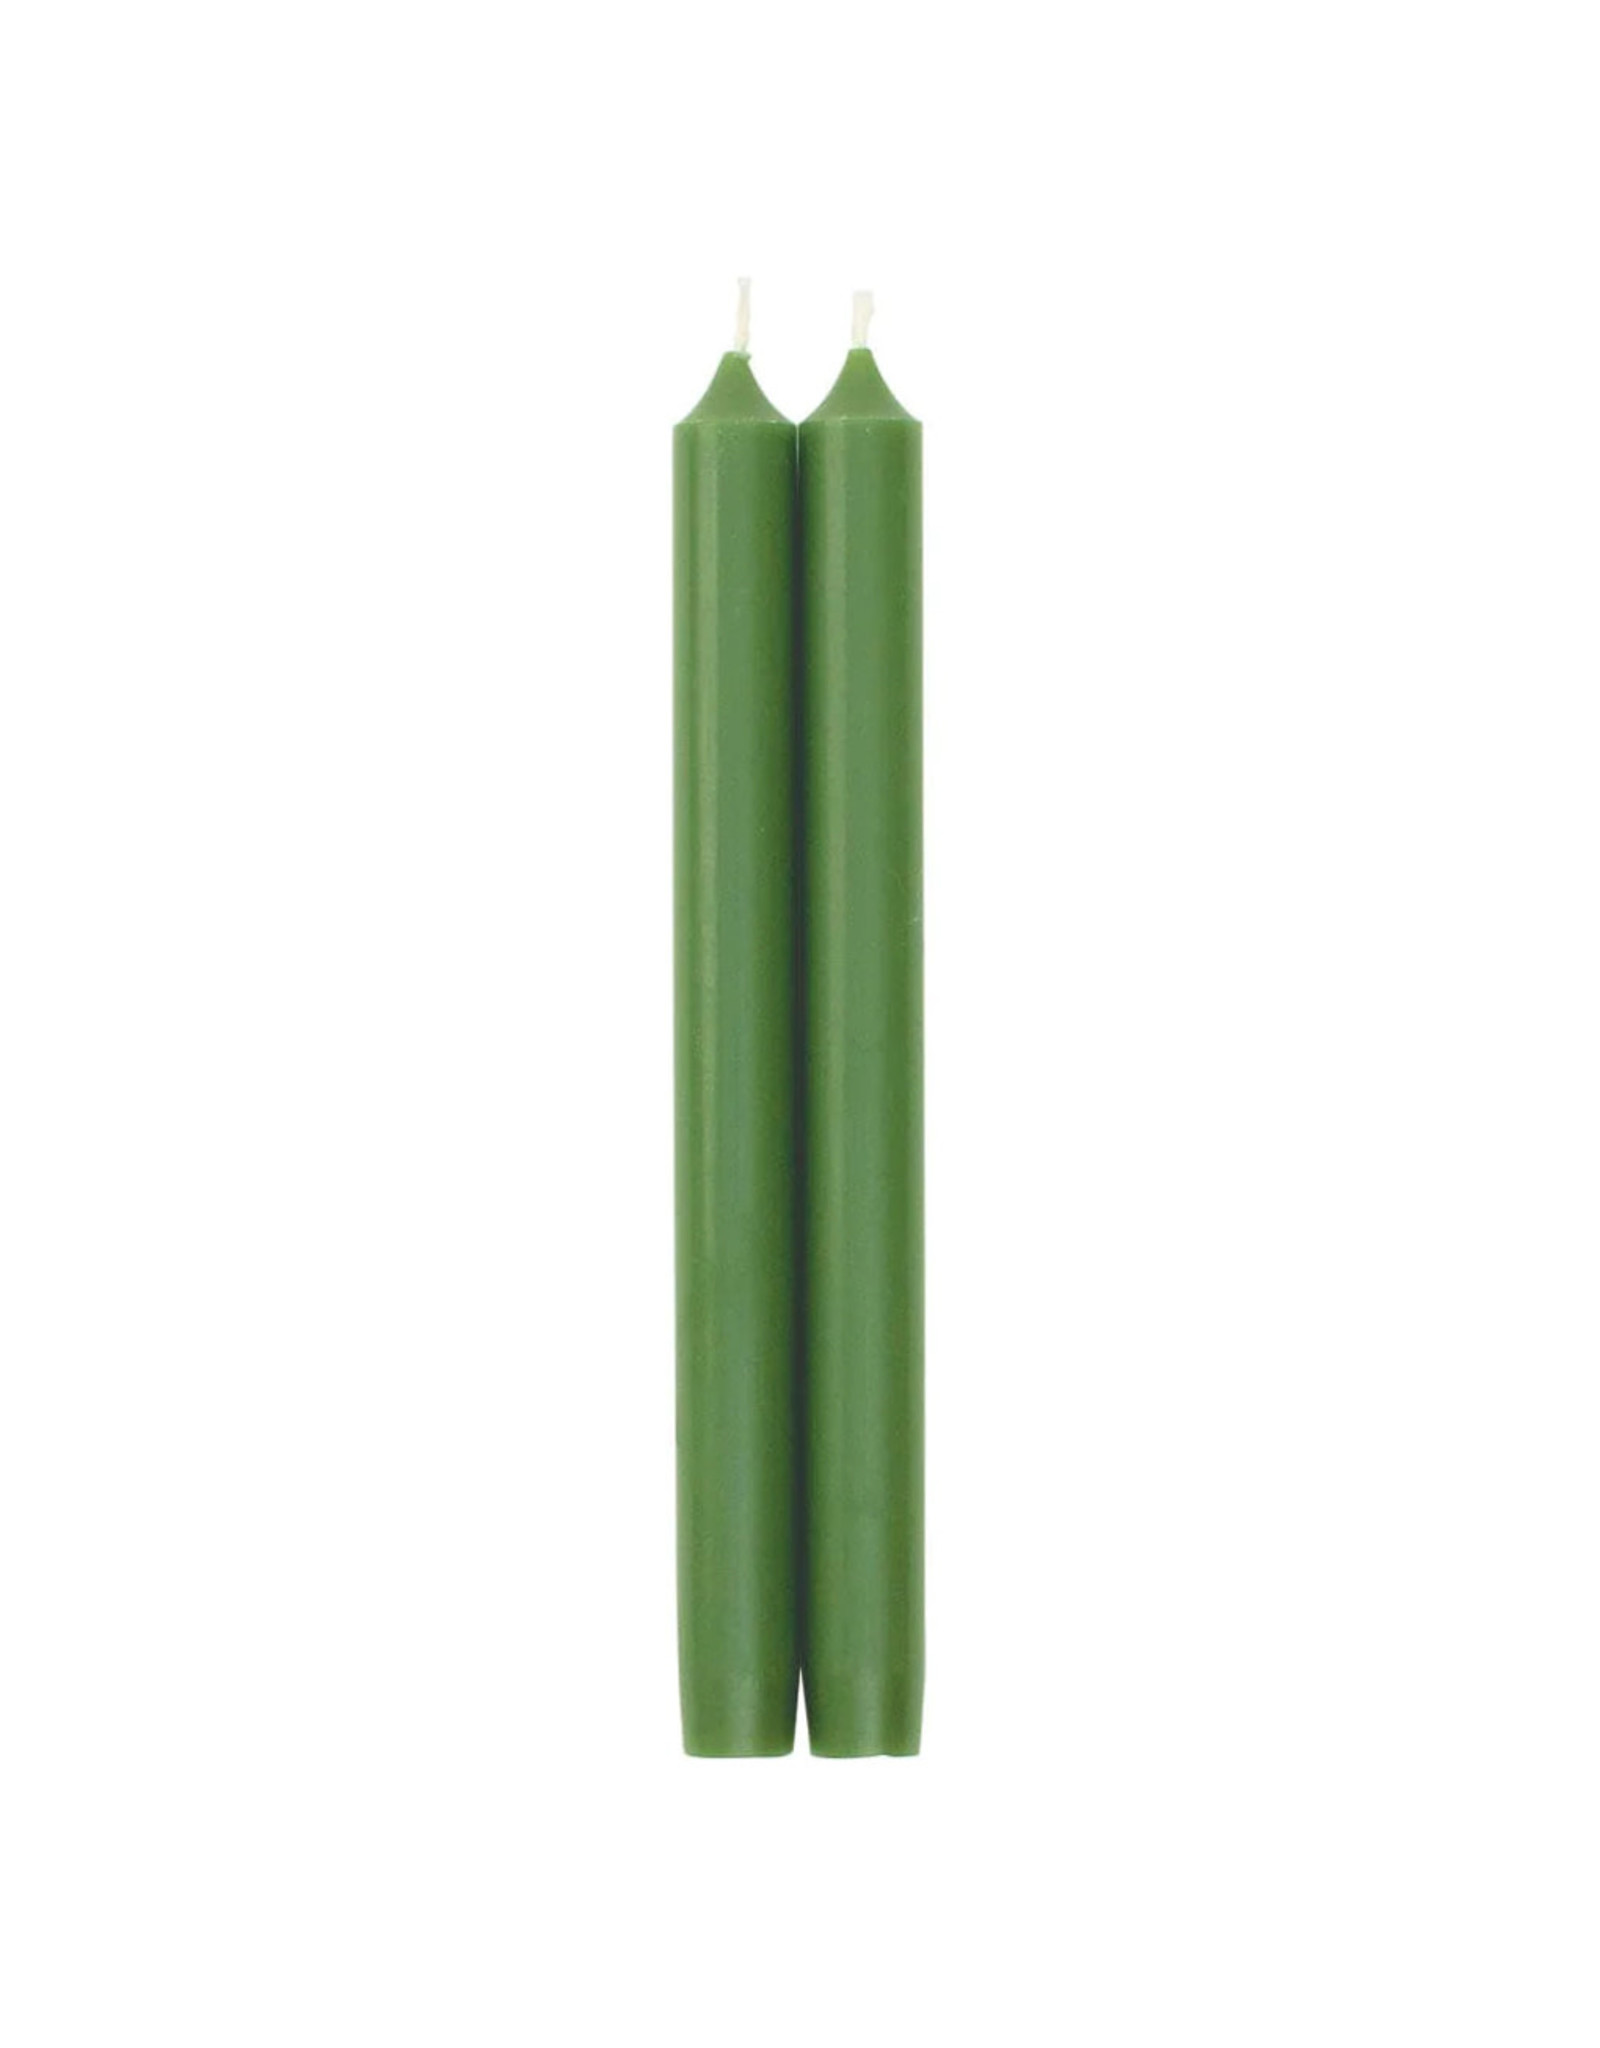 Caspari Crown Candles Tapers 10 inch 2pk In Leaf Green